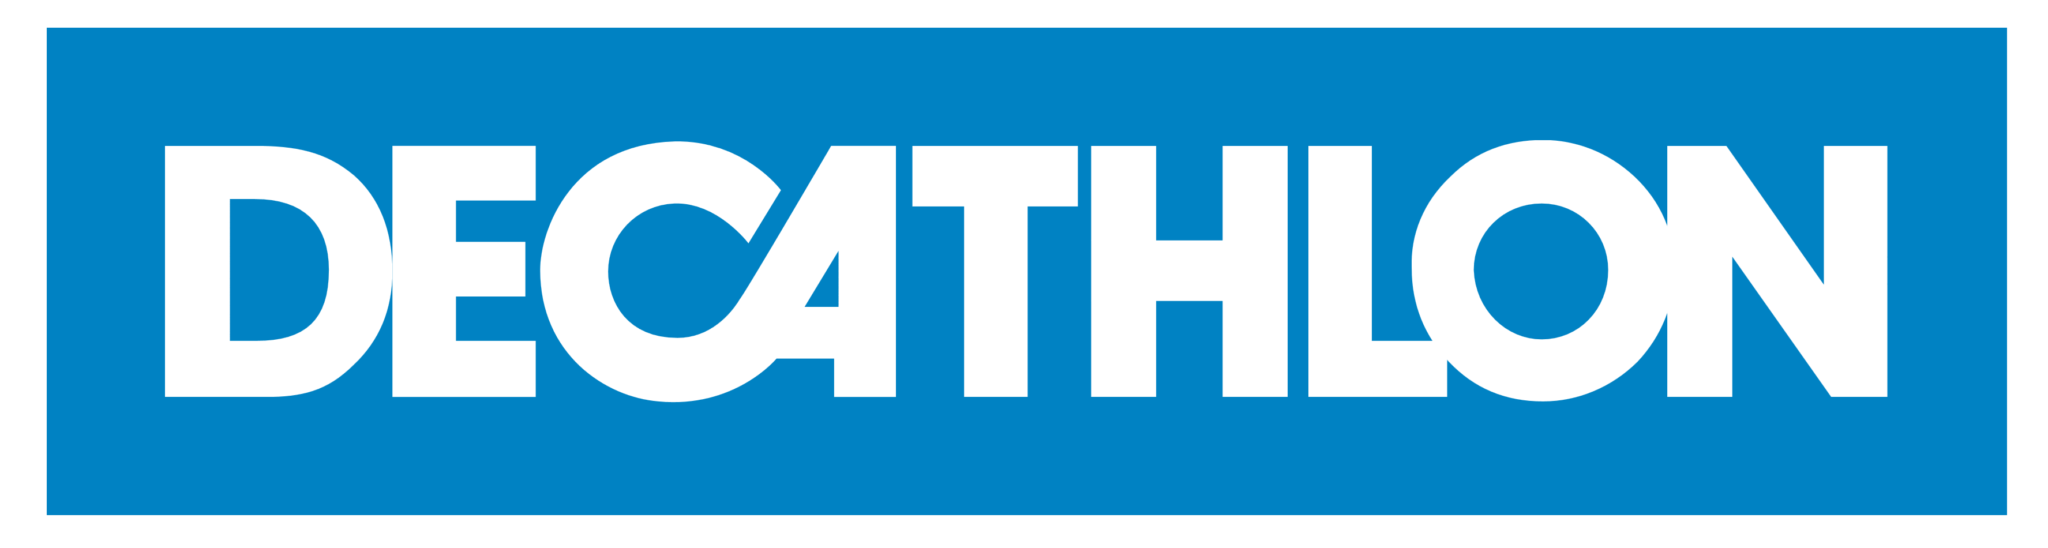 Logo decathlon - integration platform employee engagement